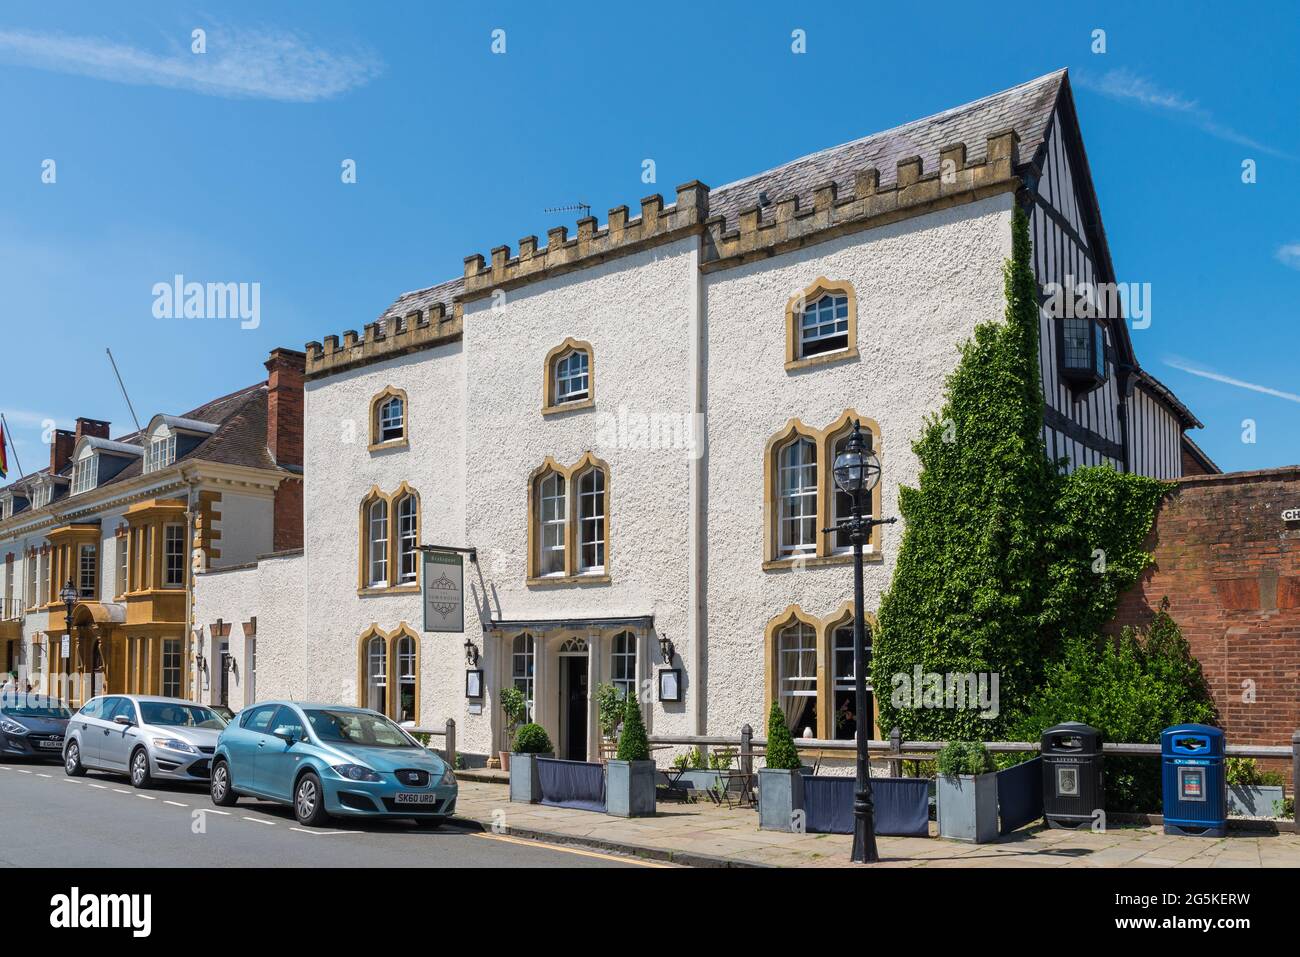 L'hôtel et restaurant Townhouse de Stratford-upon-Avon, Warwickshire Banque D'Images